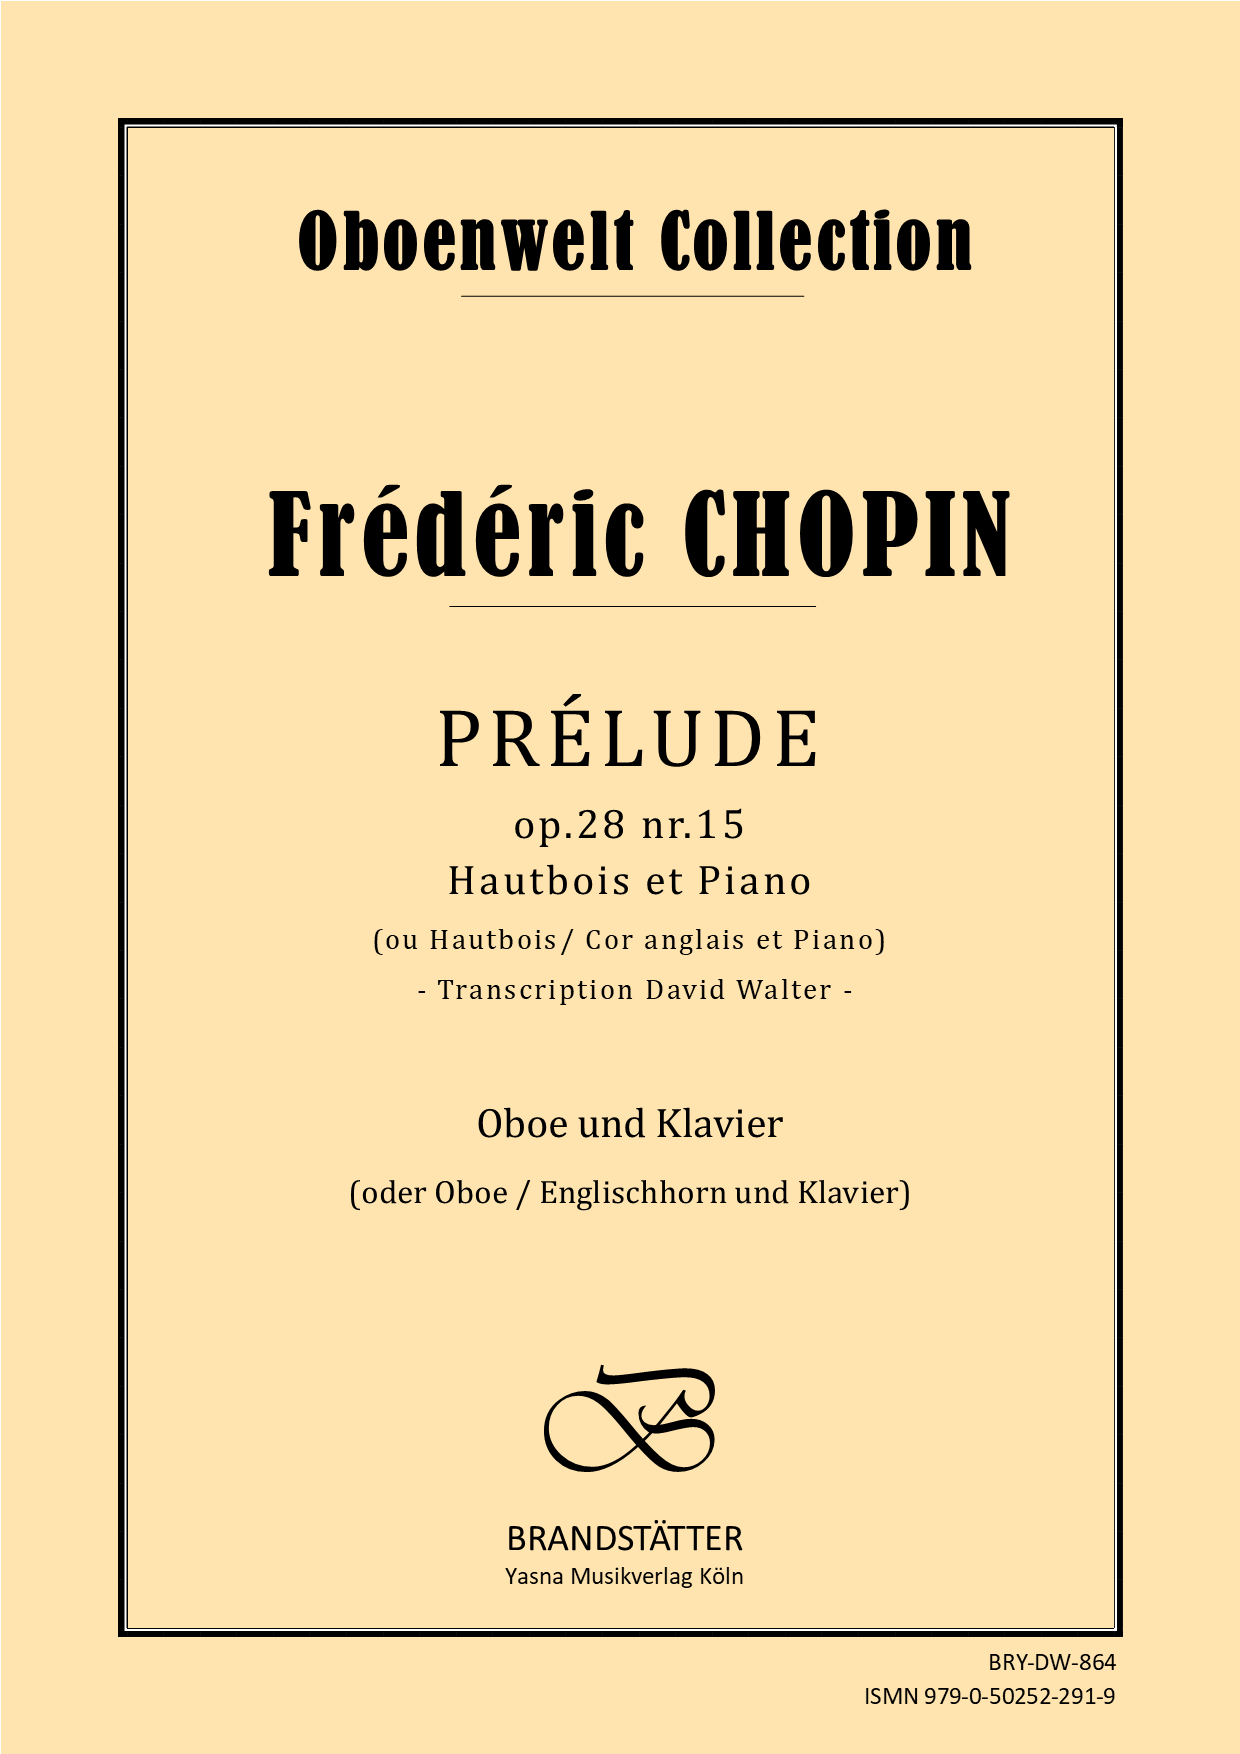 Frederic CHOPIN Prelude op.28